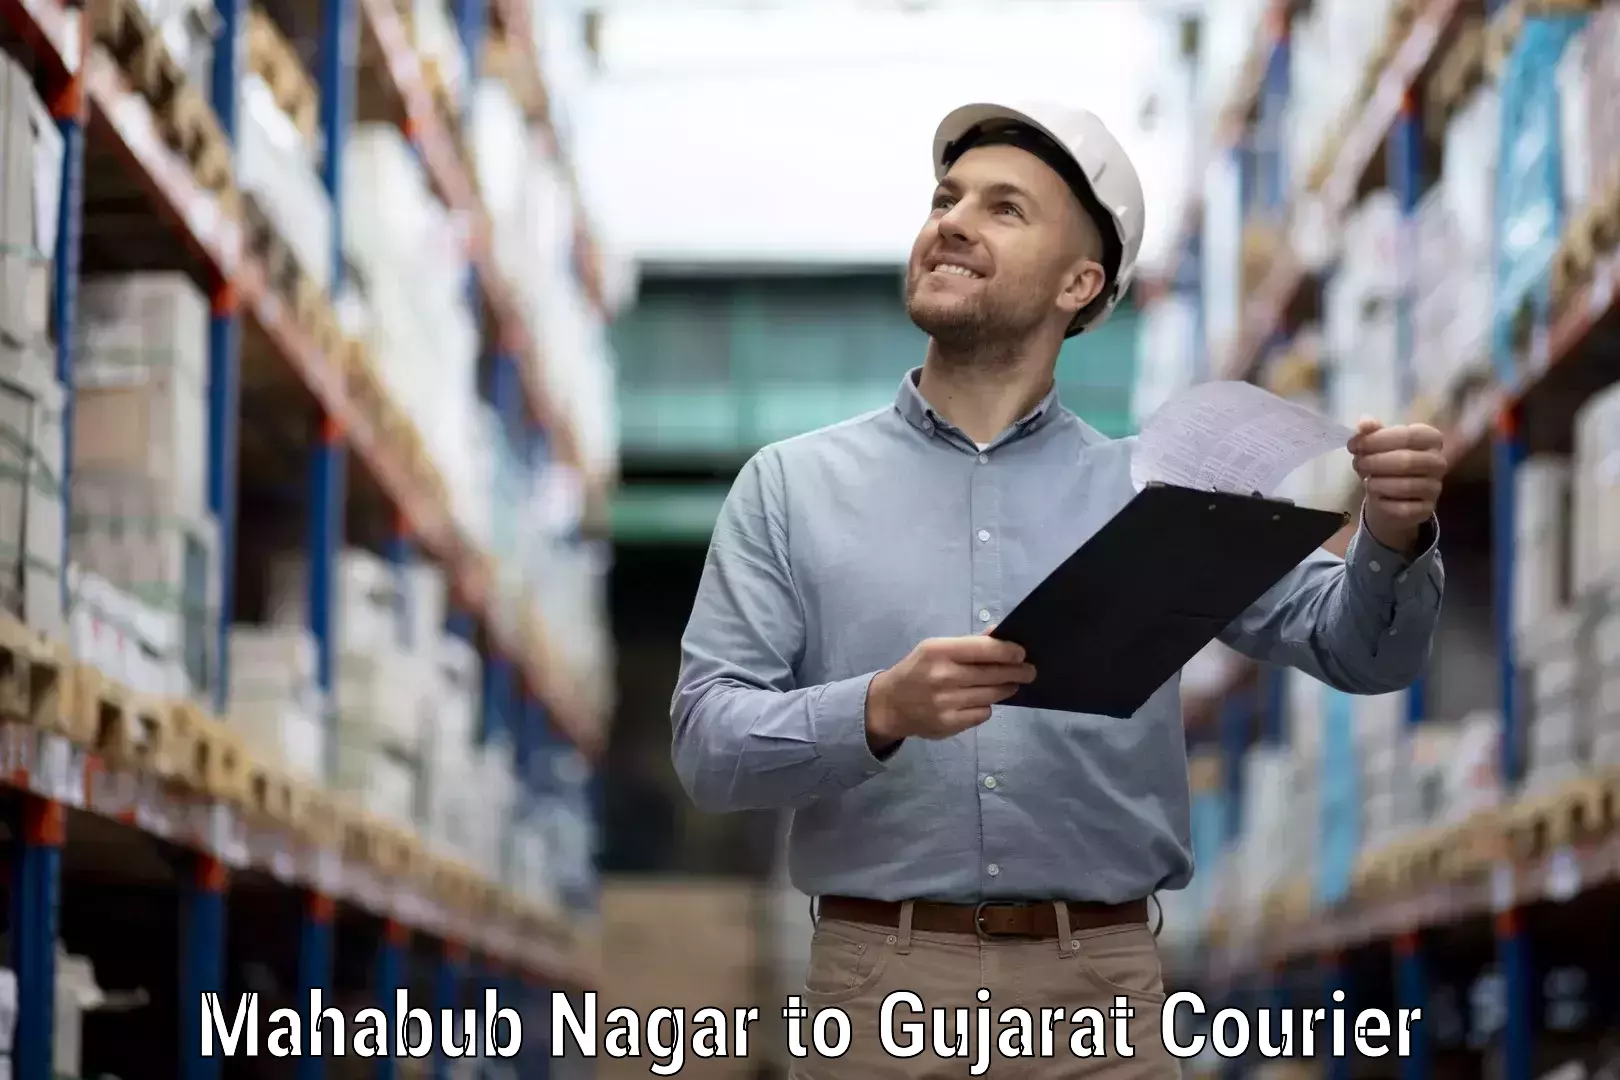 Courier service booking Mahabub Nagar to Dholera